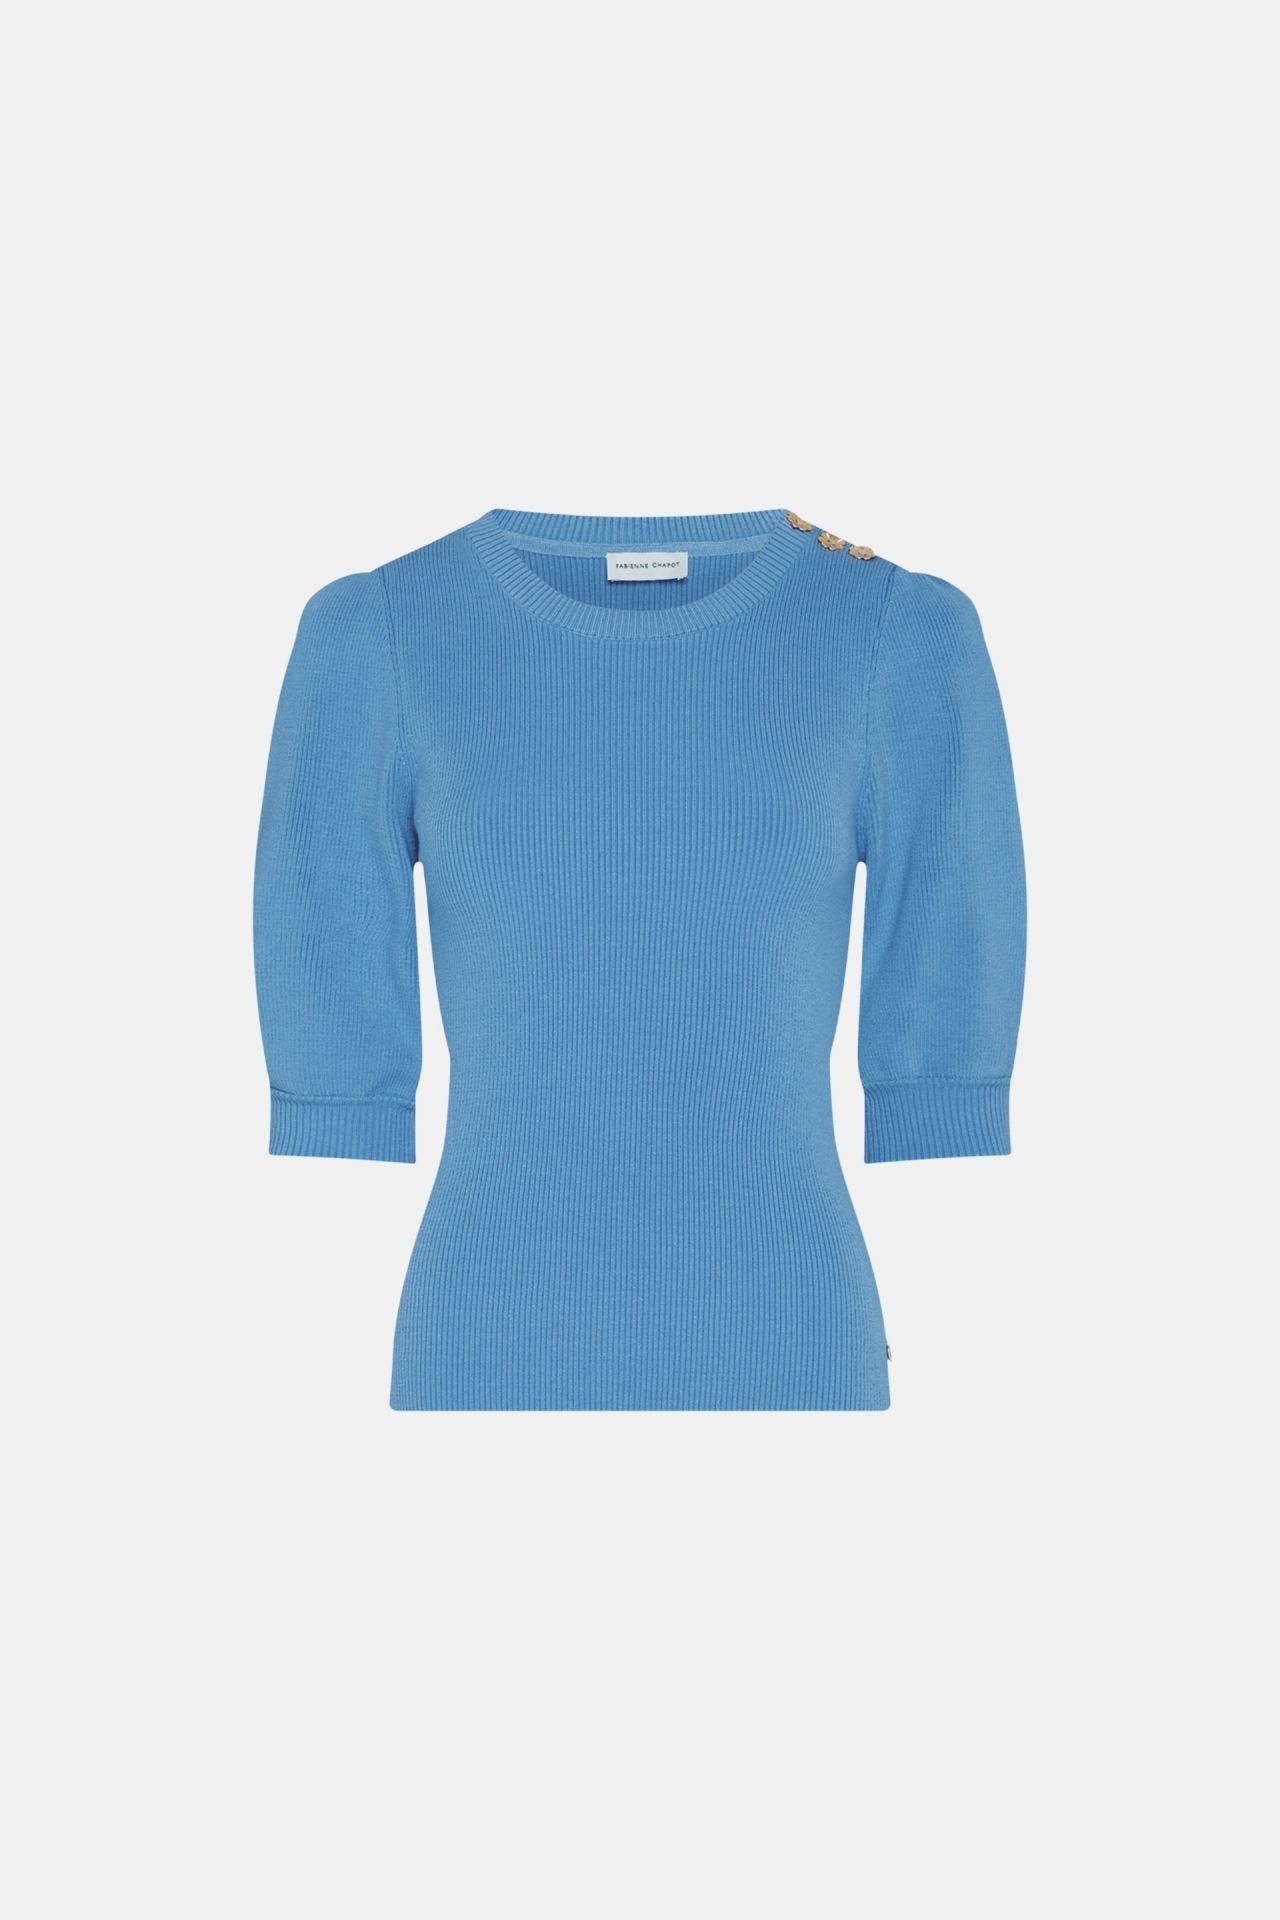 Blauwe dames pullover Fabienne Chapot - Lillian short sleeve pullover